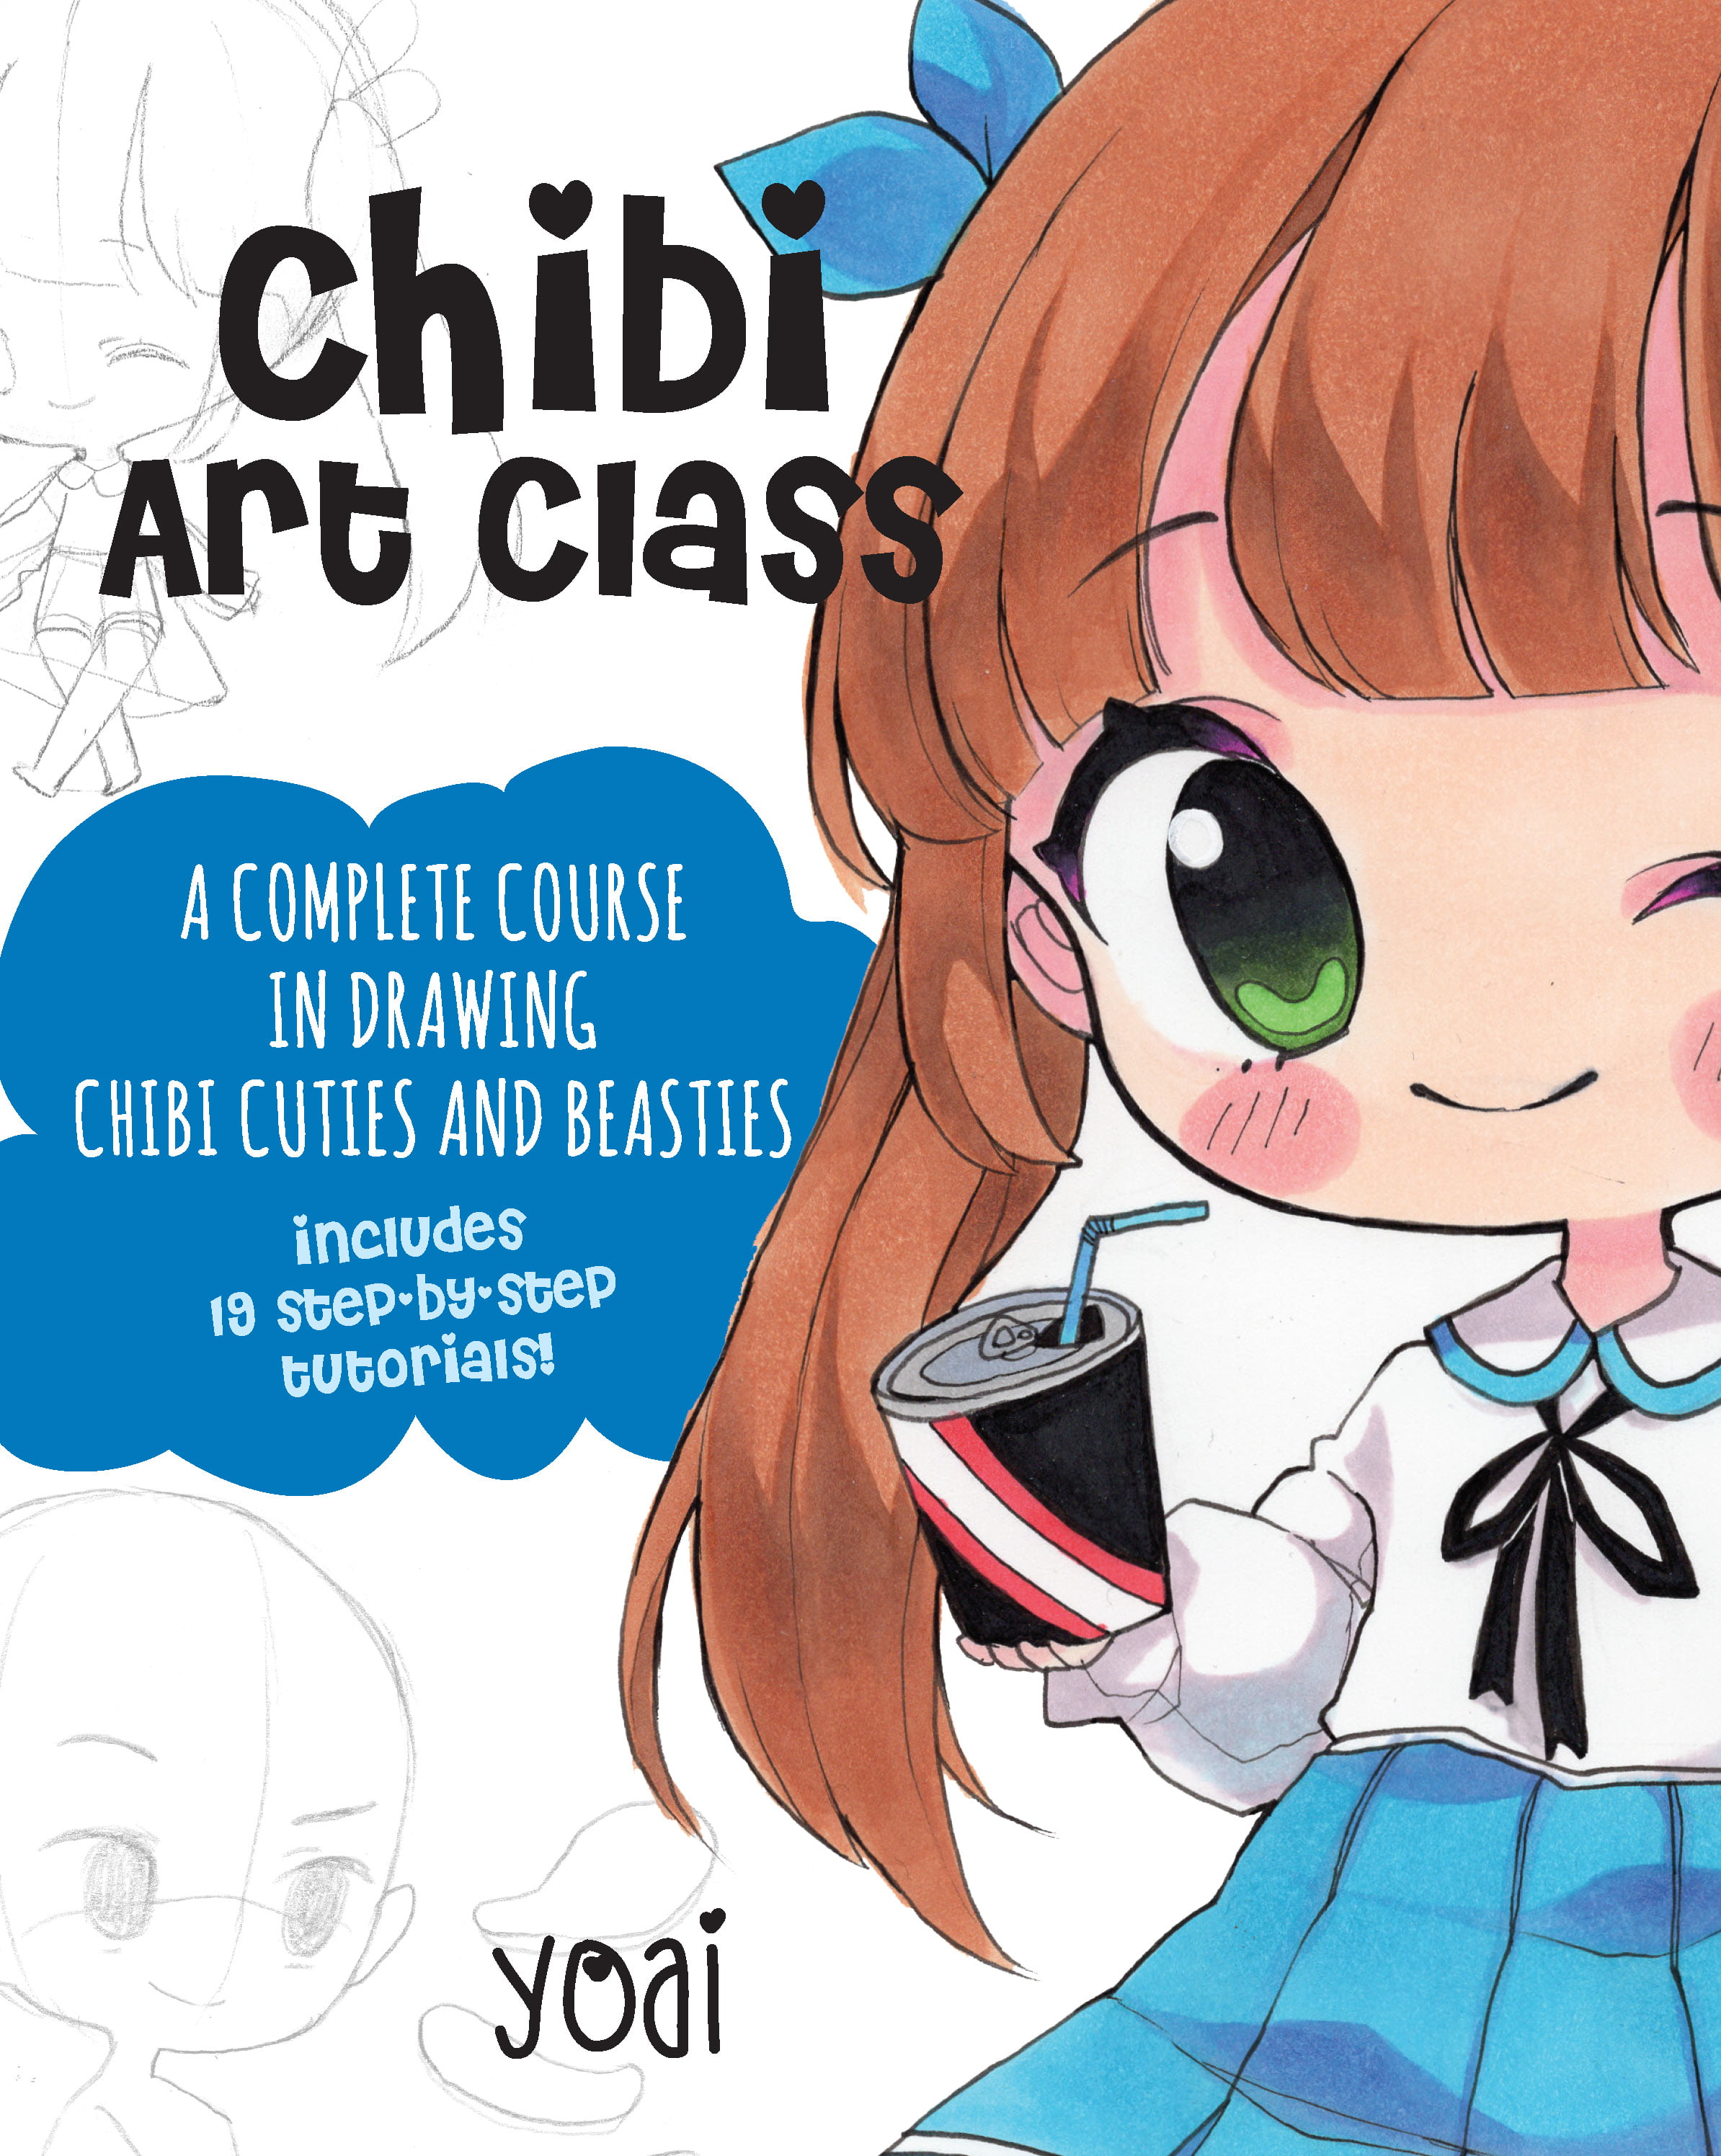 Pretty Anime Chibi Girl Notebook: Cute Kawaii Chibi girl Notebook, For  kids, teens, and adults